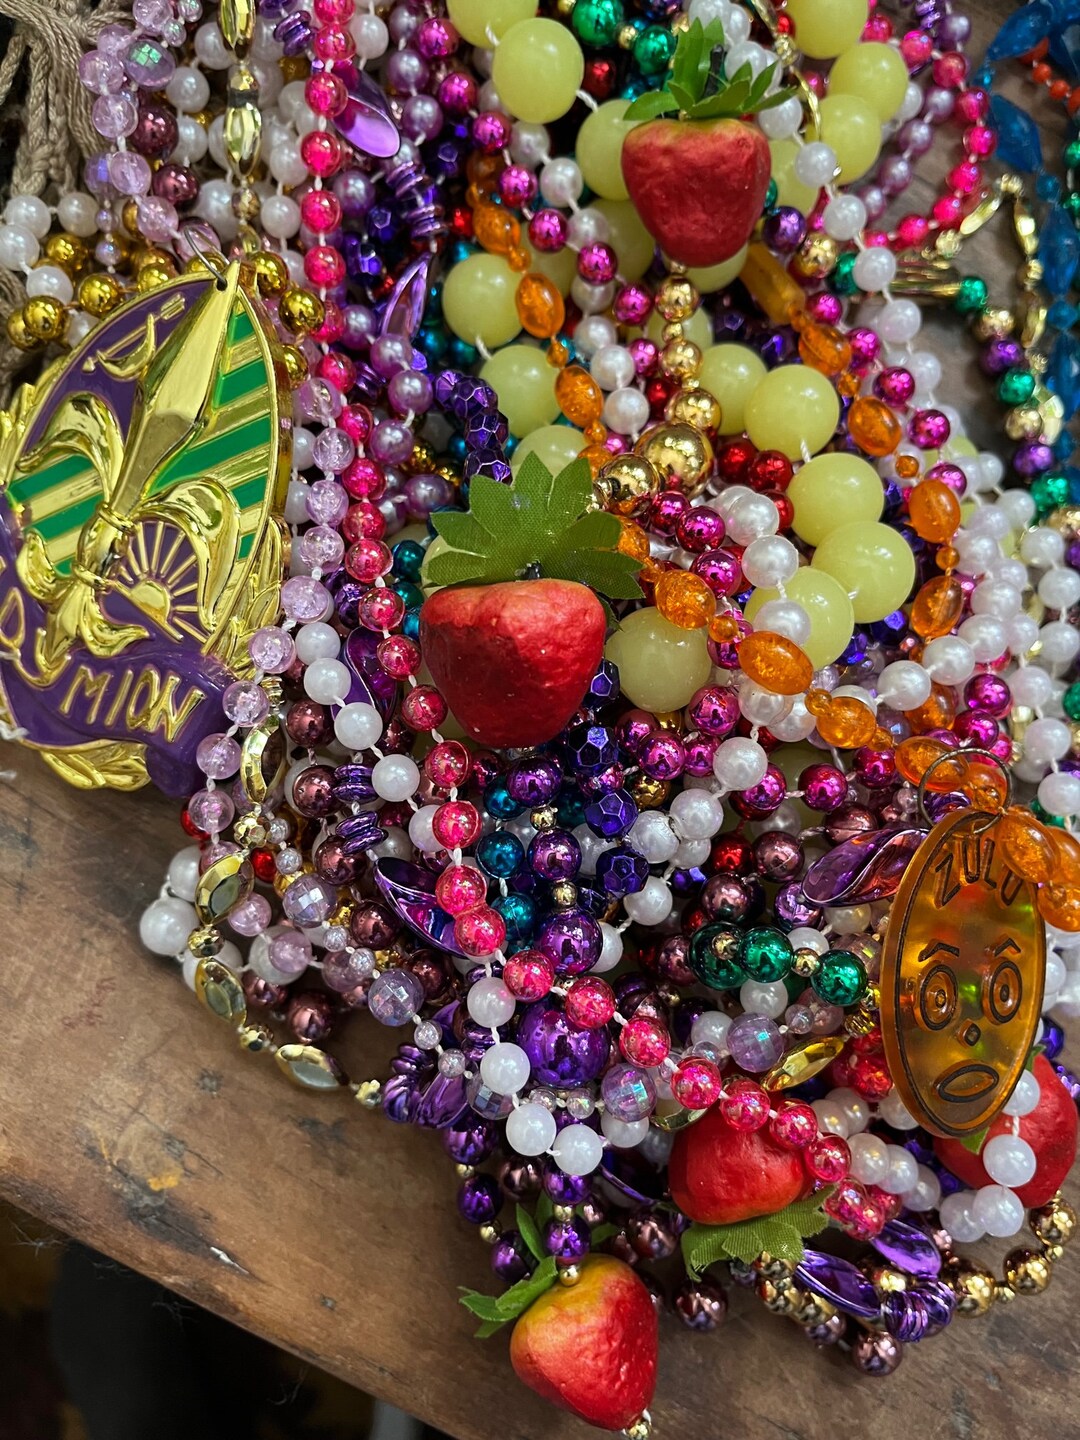 Promotional Customized Mardi Gras Beads